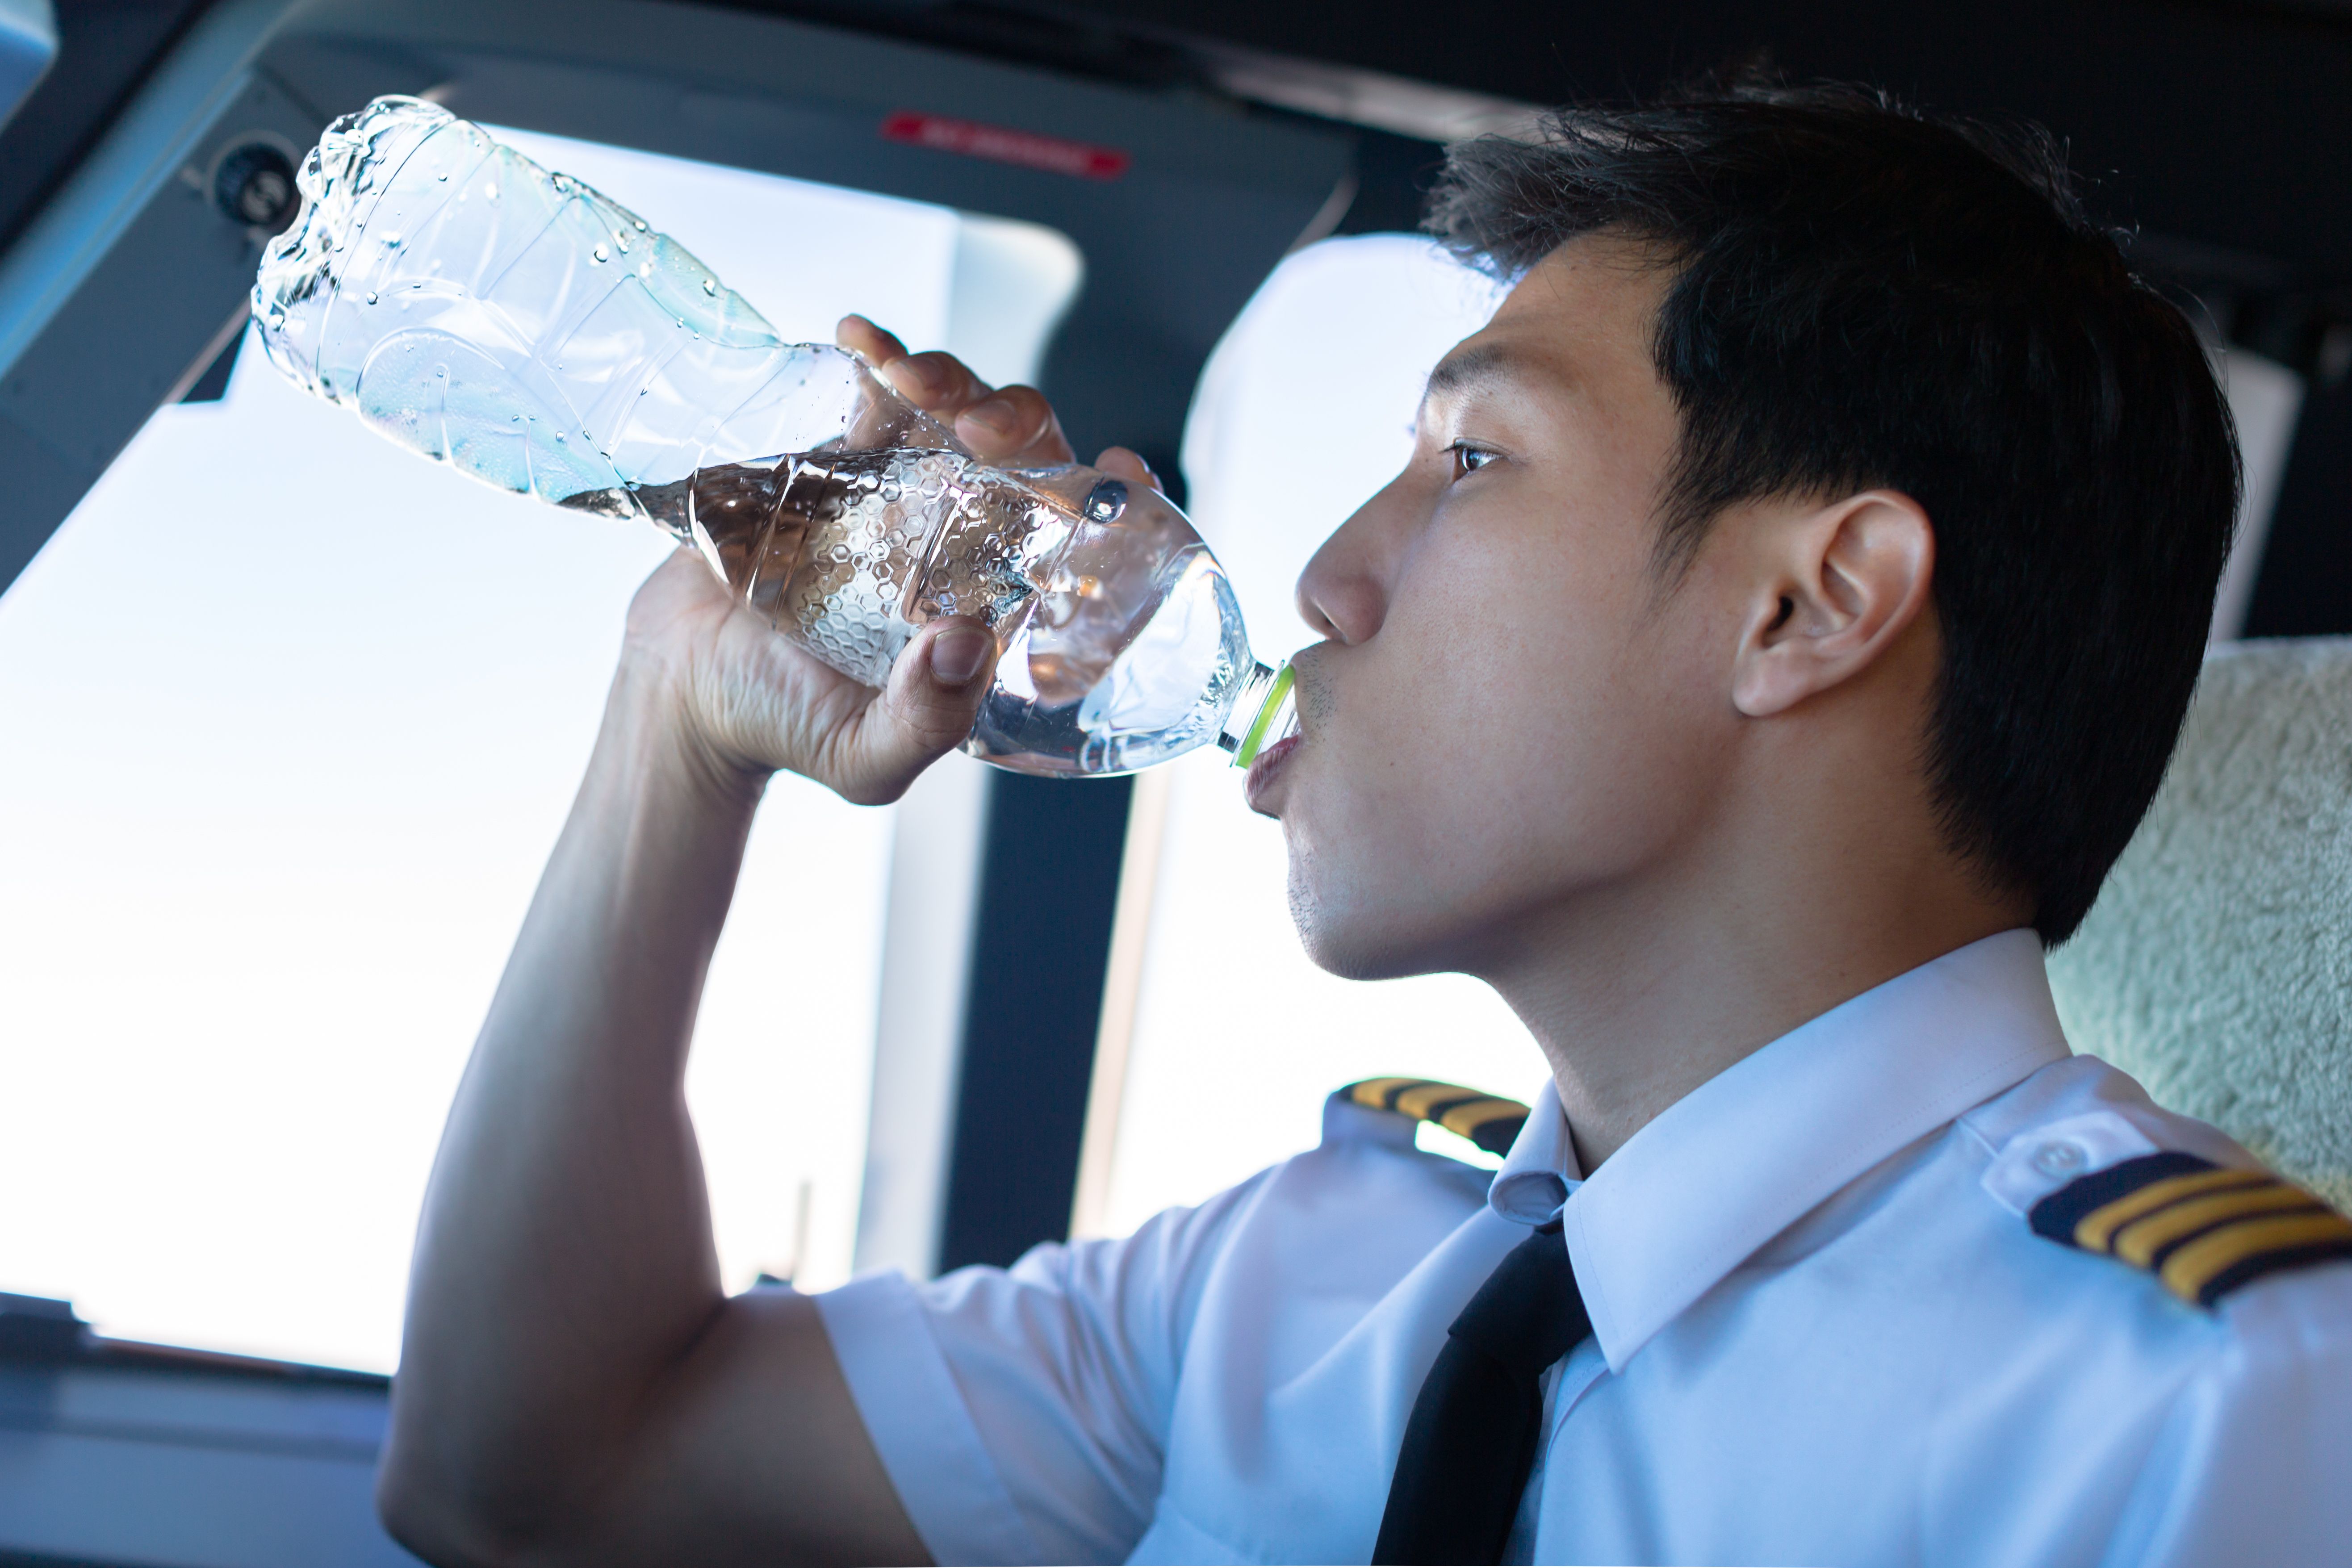 A pilot drinking water